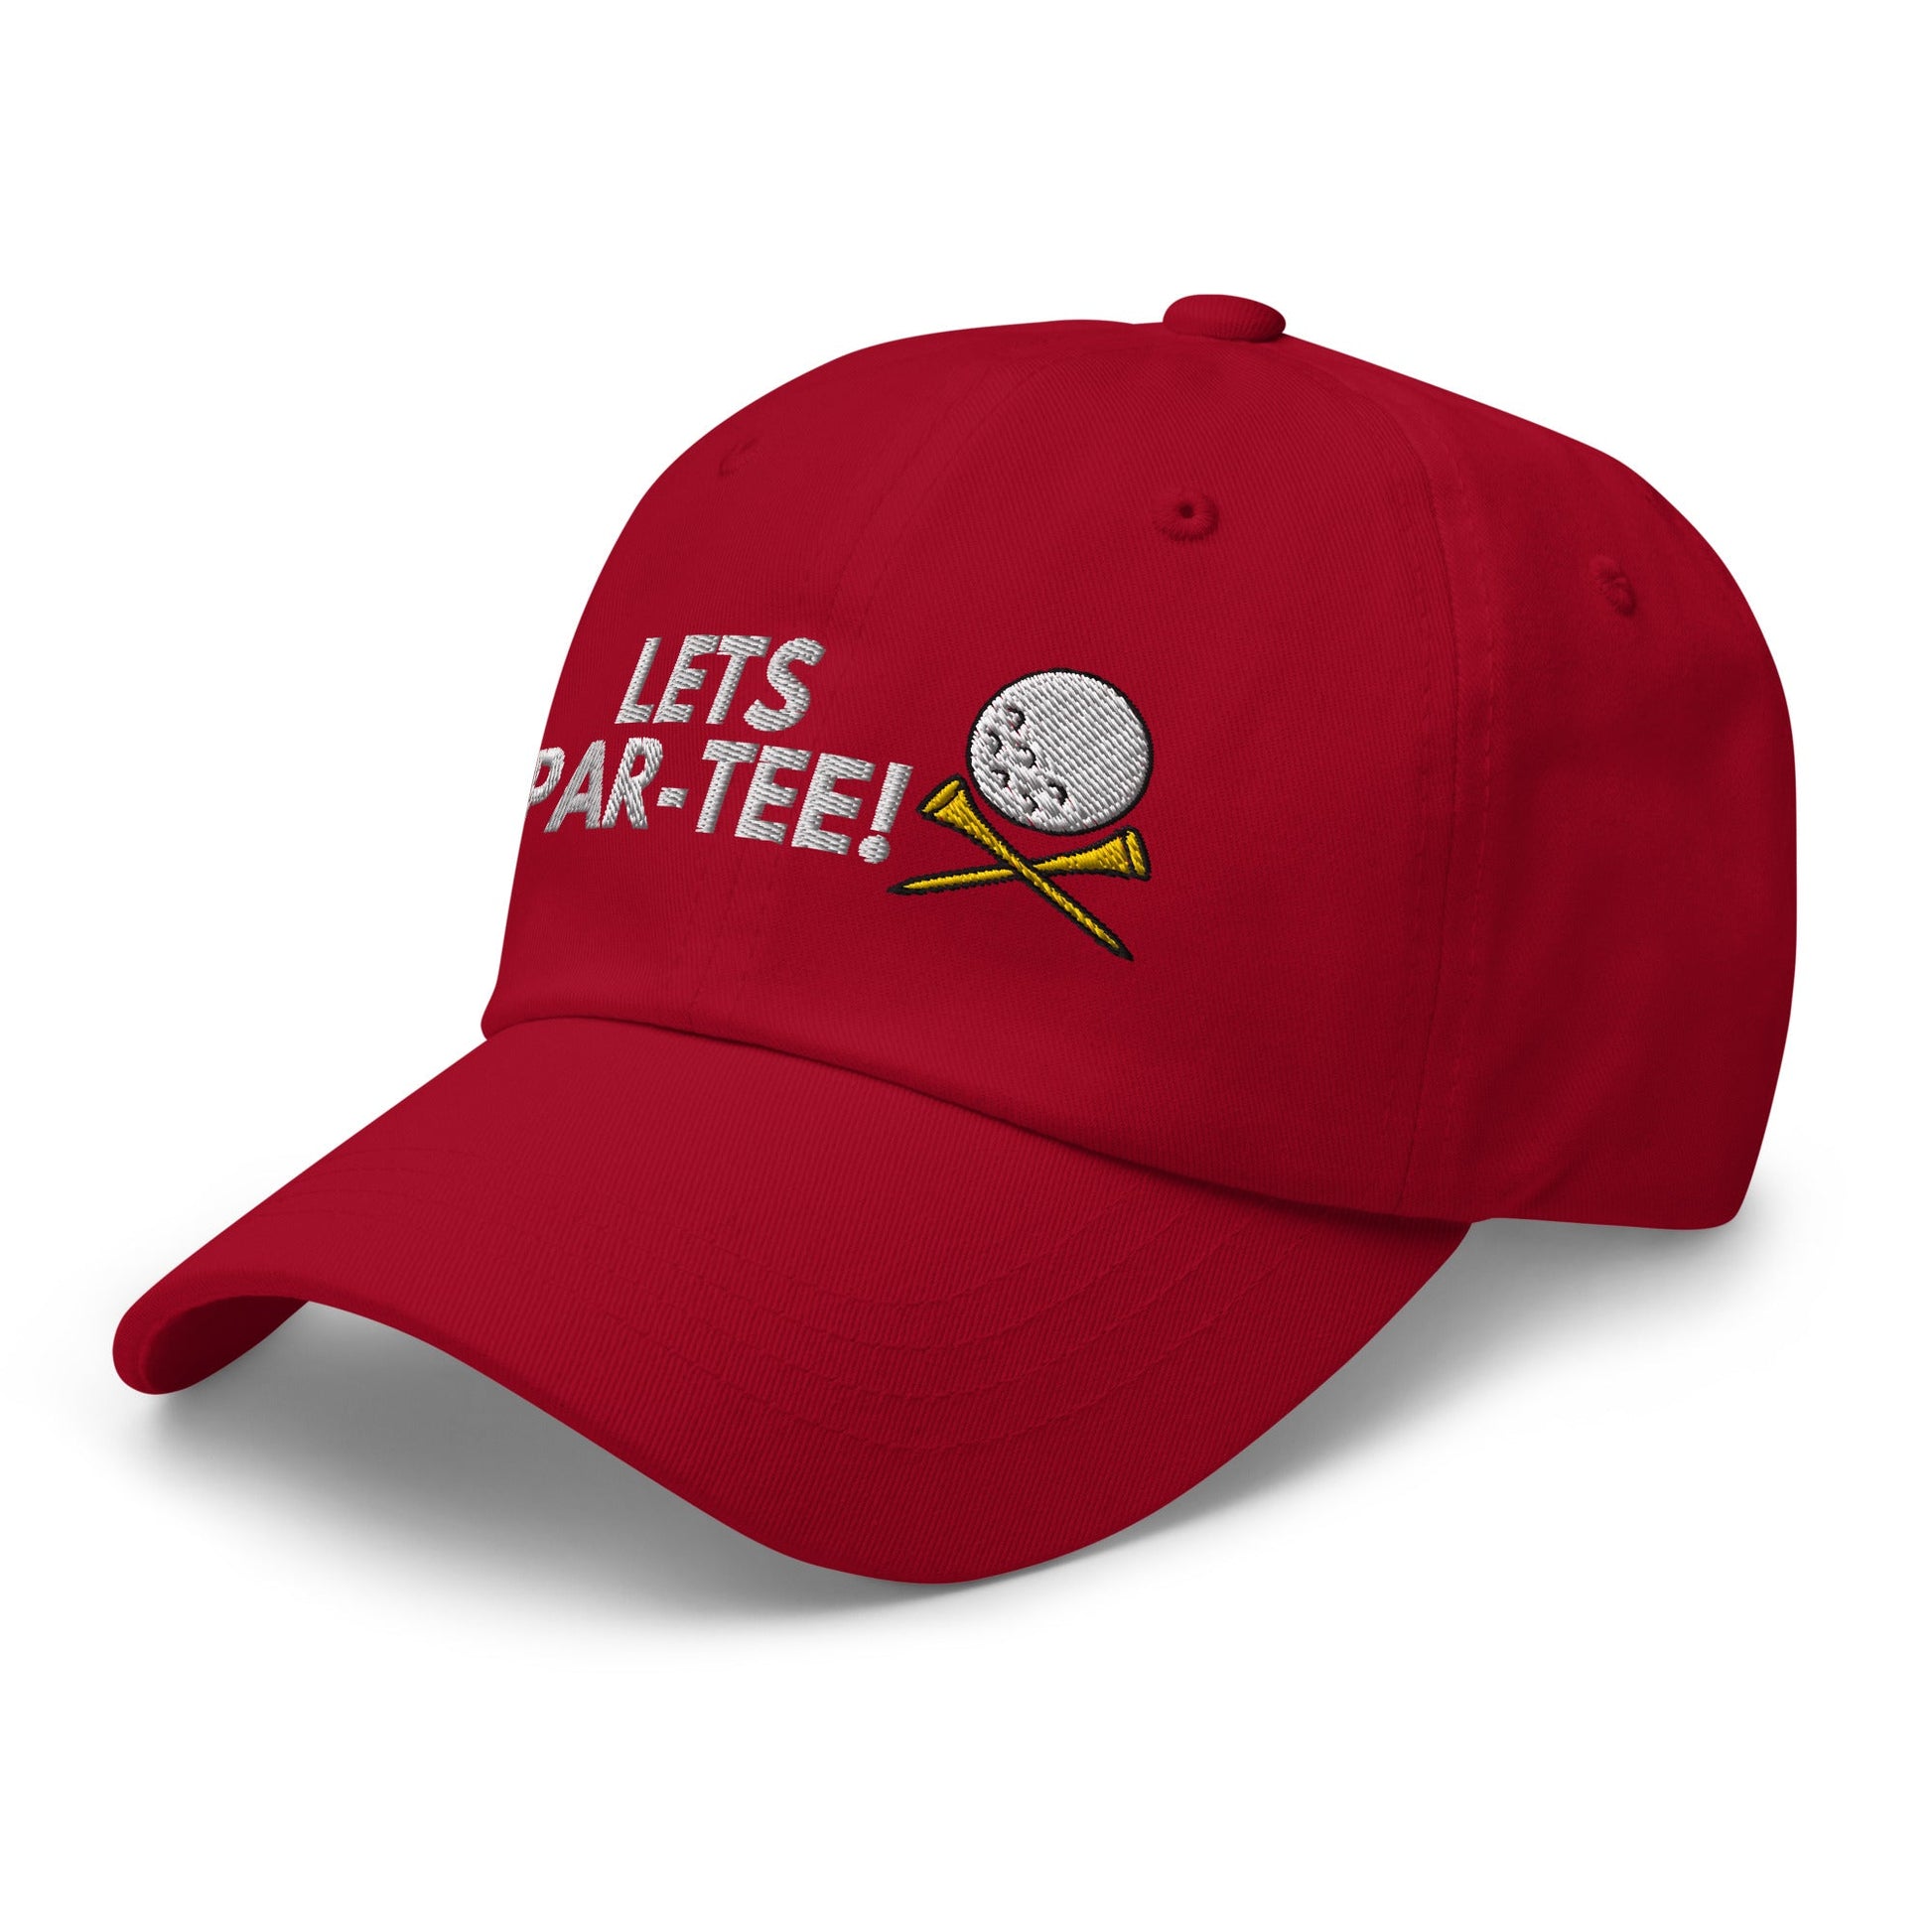 Funny Golfer Gifts  Dad Cap Lets Par-Tee Hat Cap